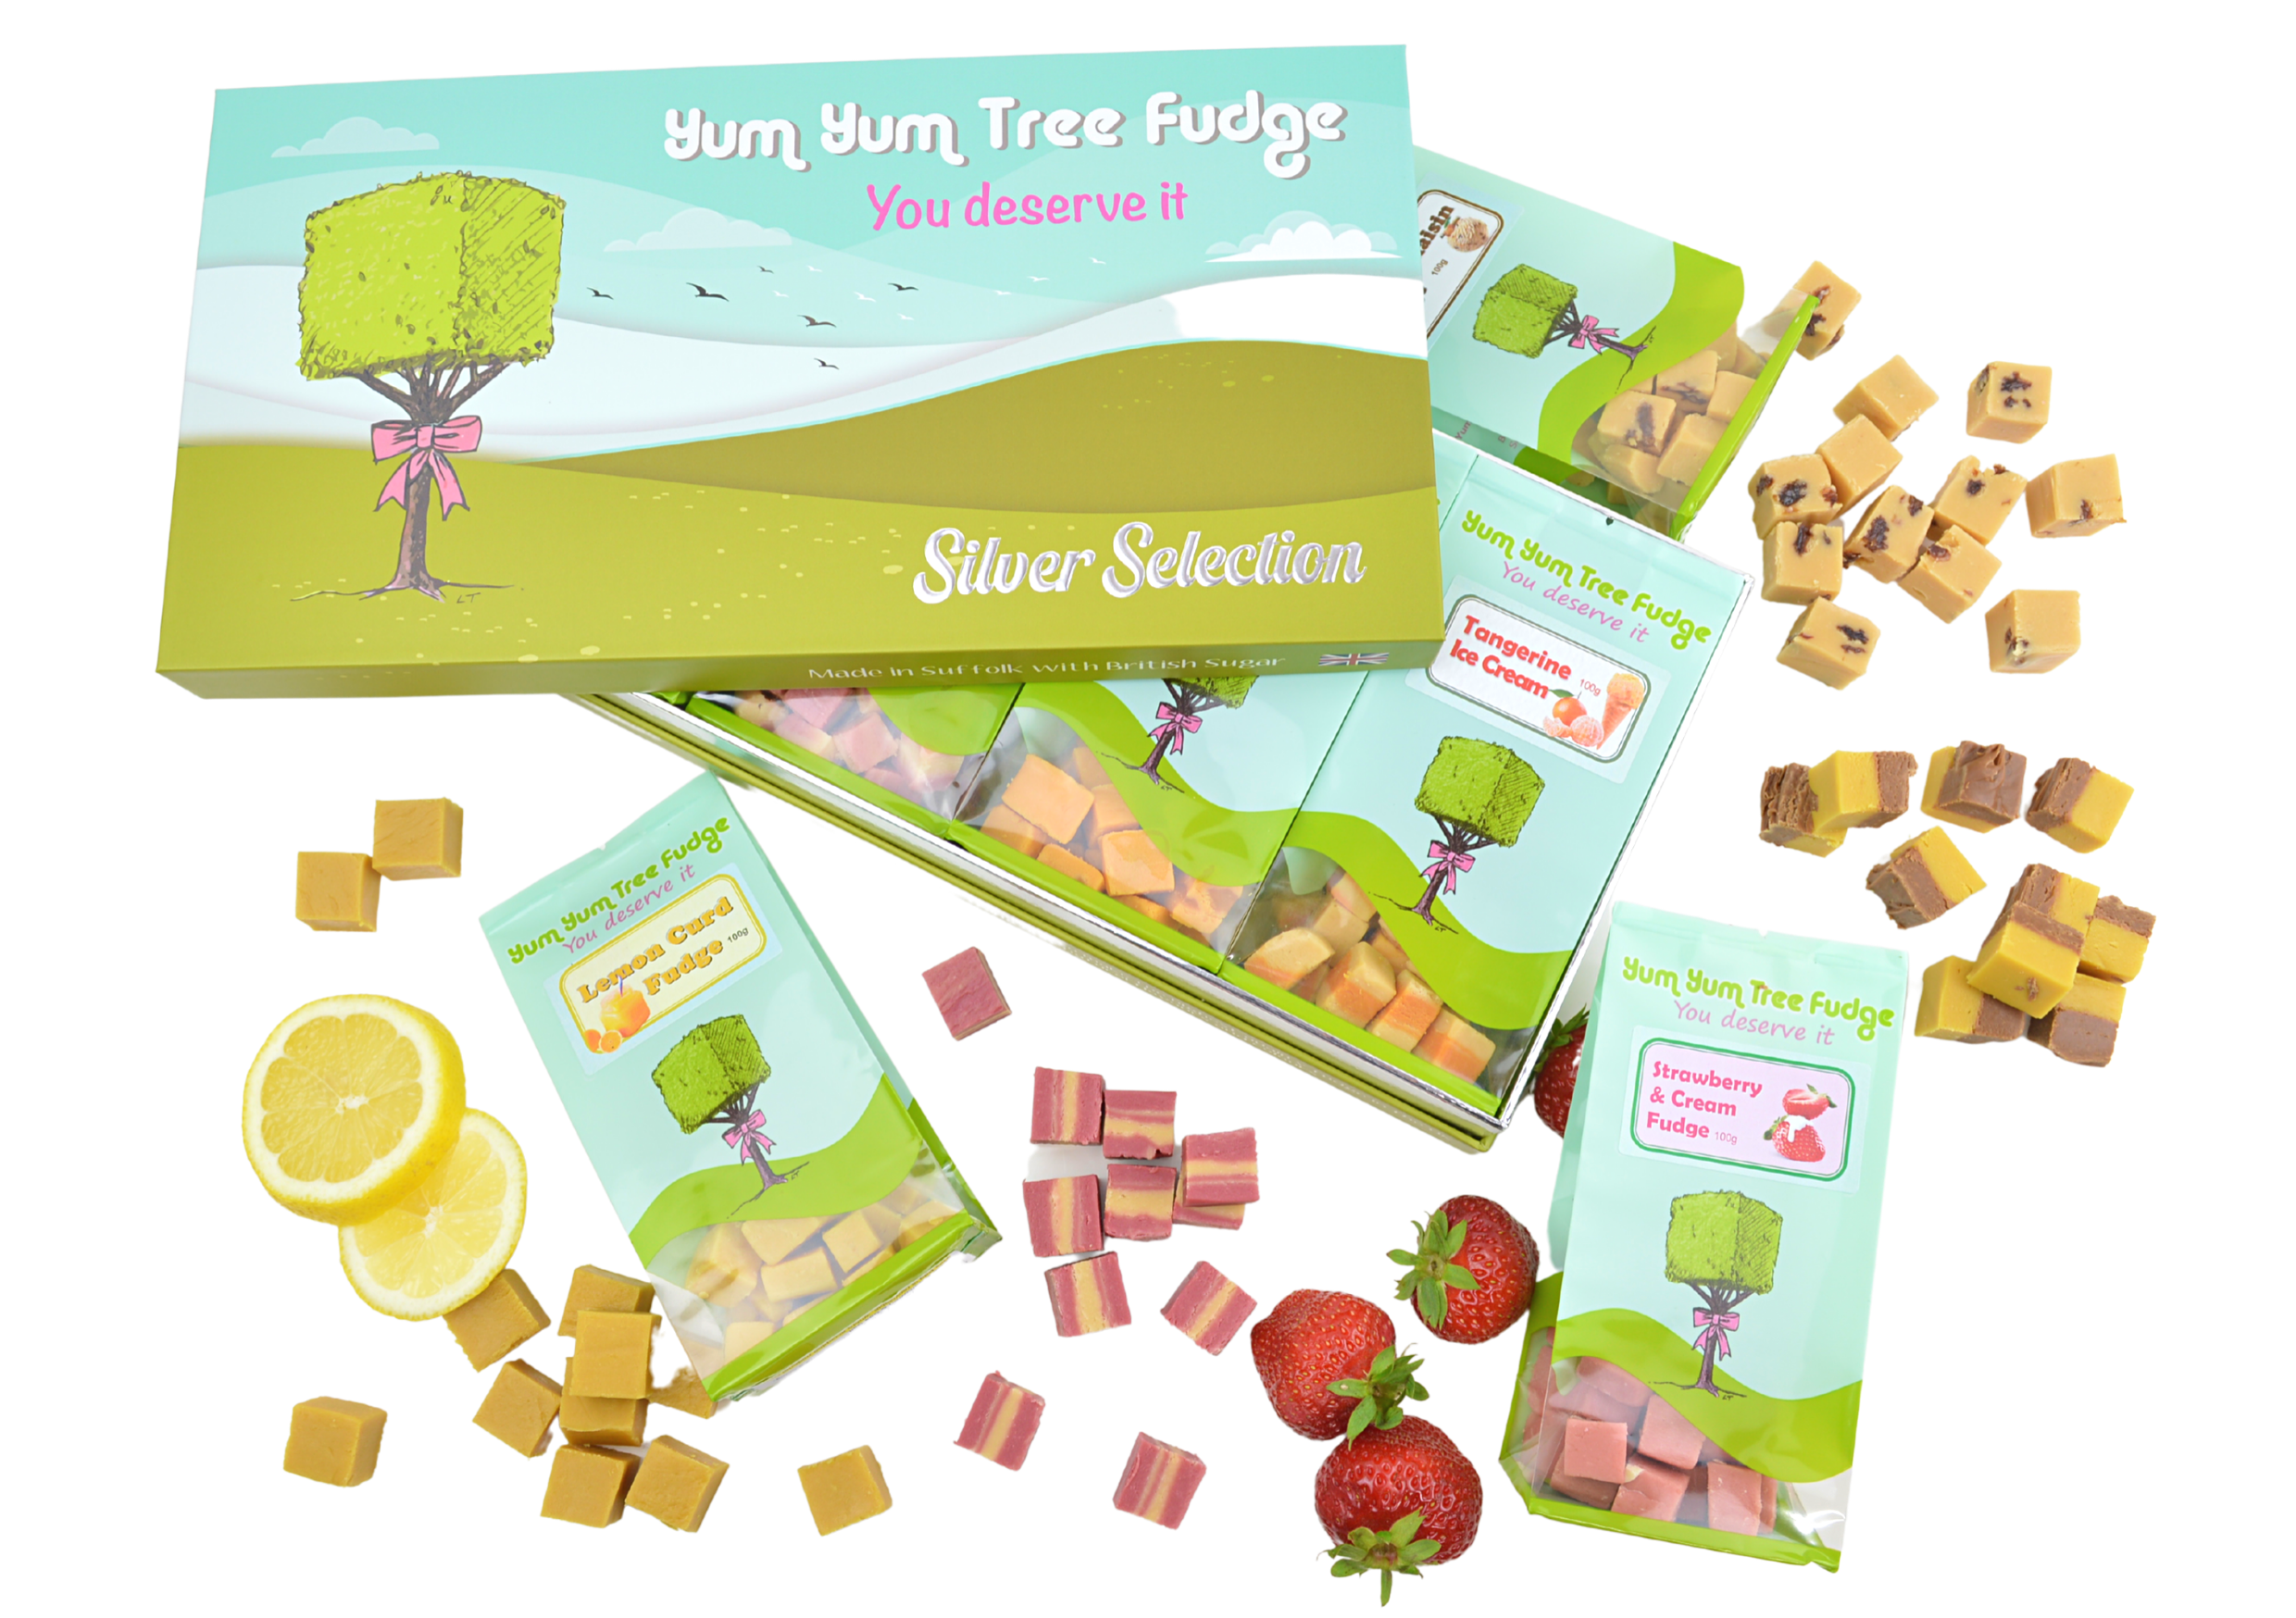 Silver Gift Box with 8 bags of fudge by Yum Yum Tree Fudge